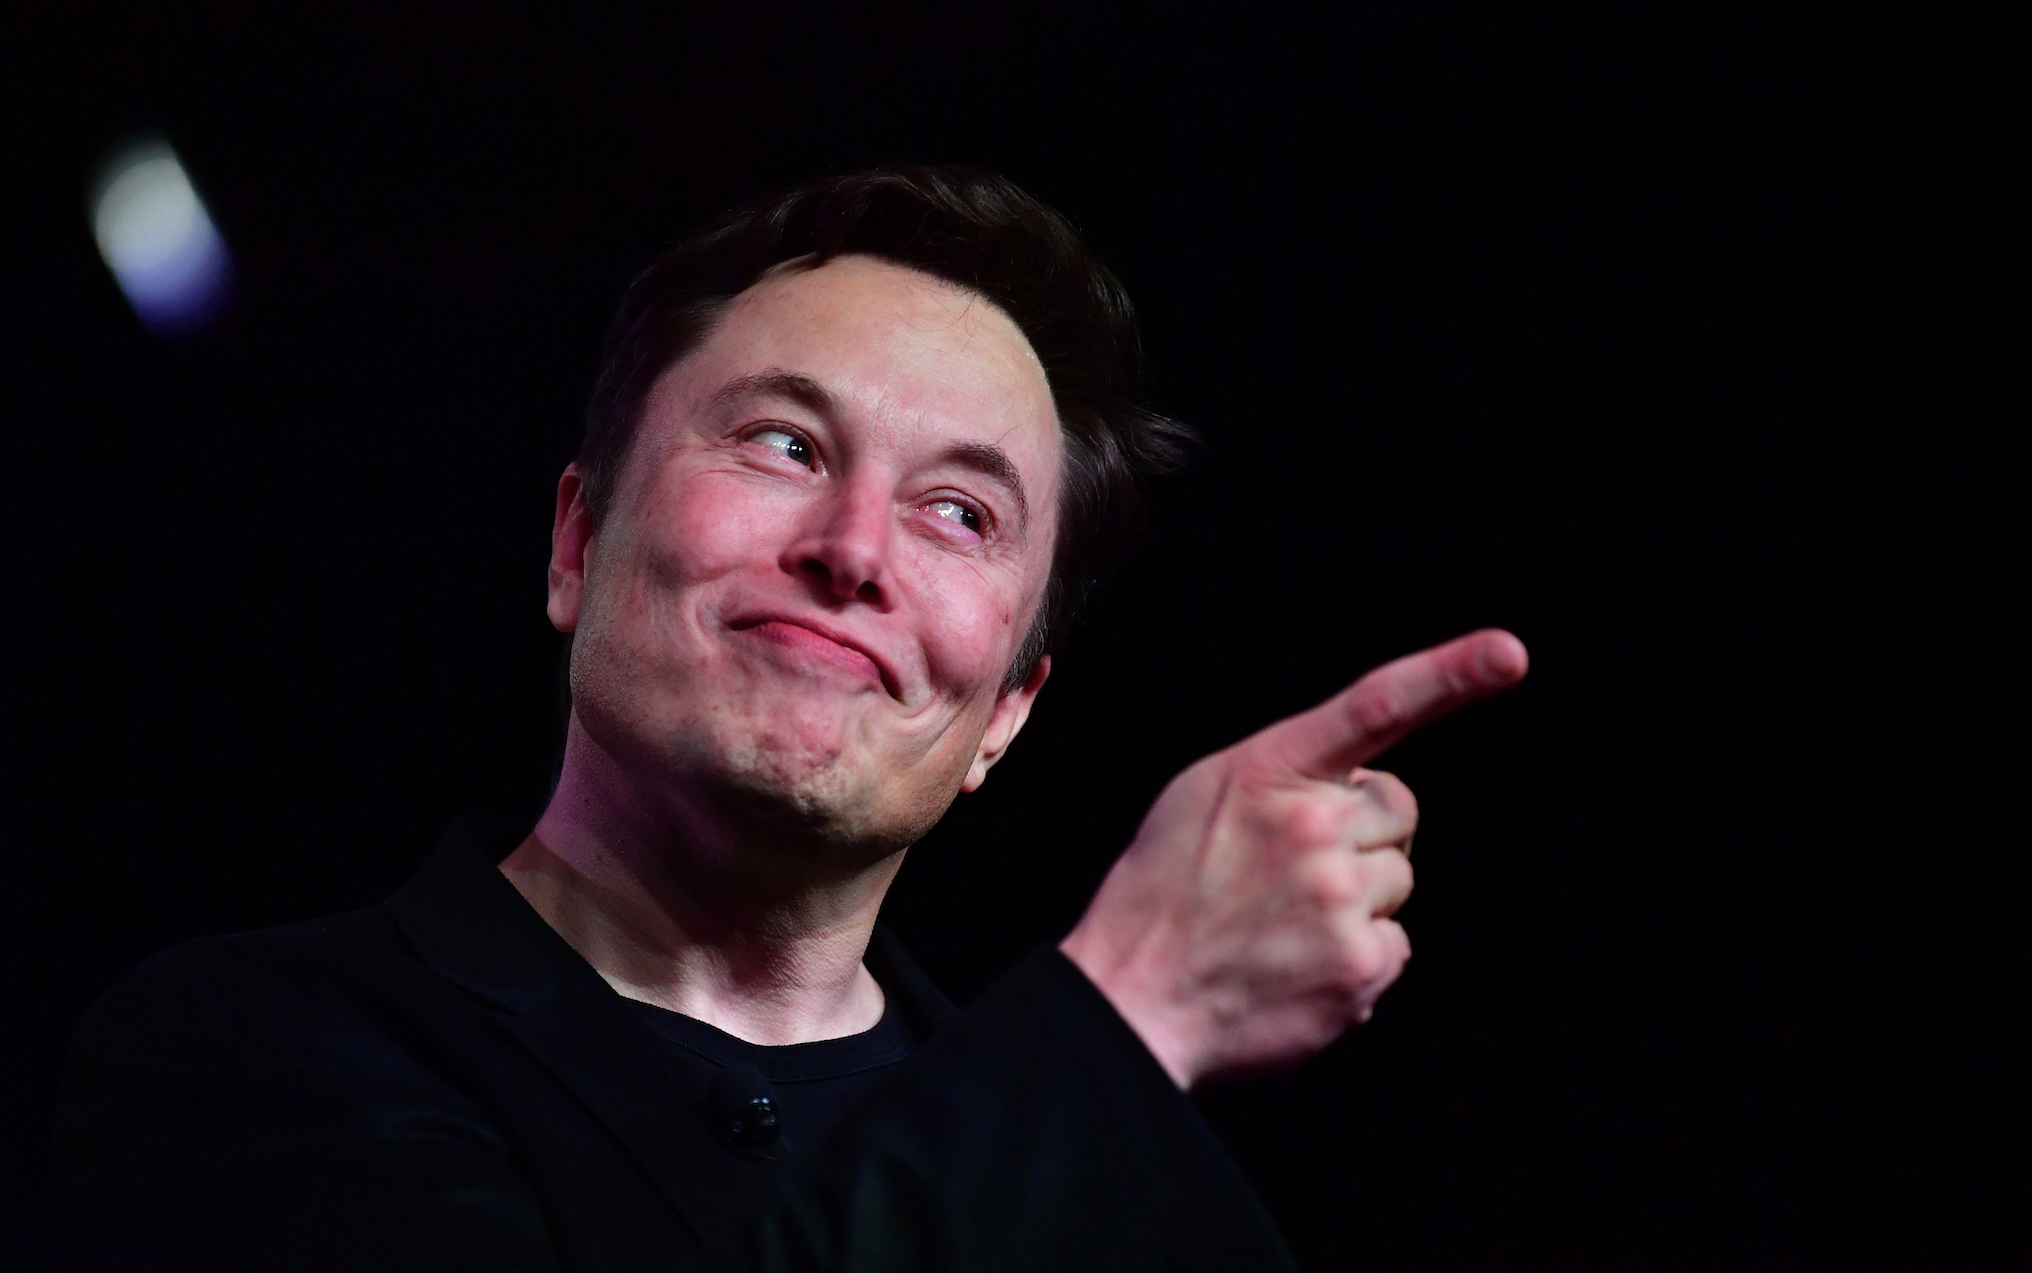 O Elon Musk, η διάσημη ατάκα του Αλ Πατσίνο από το Νονό και η ηθική των πλουσίων